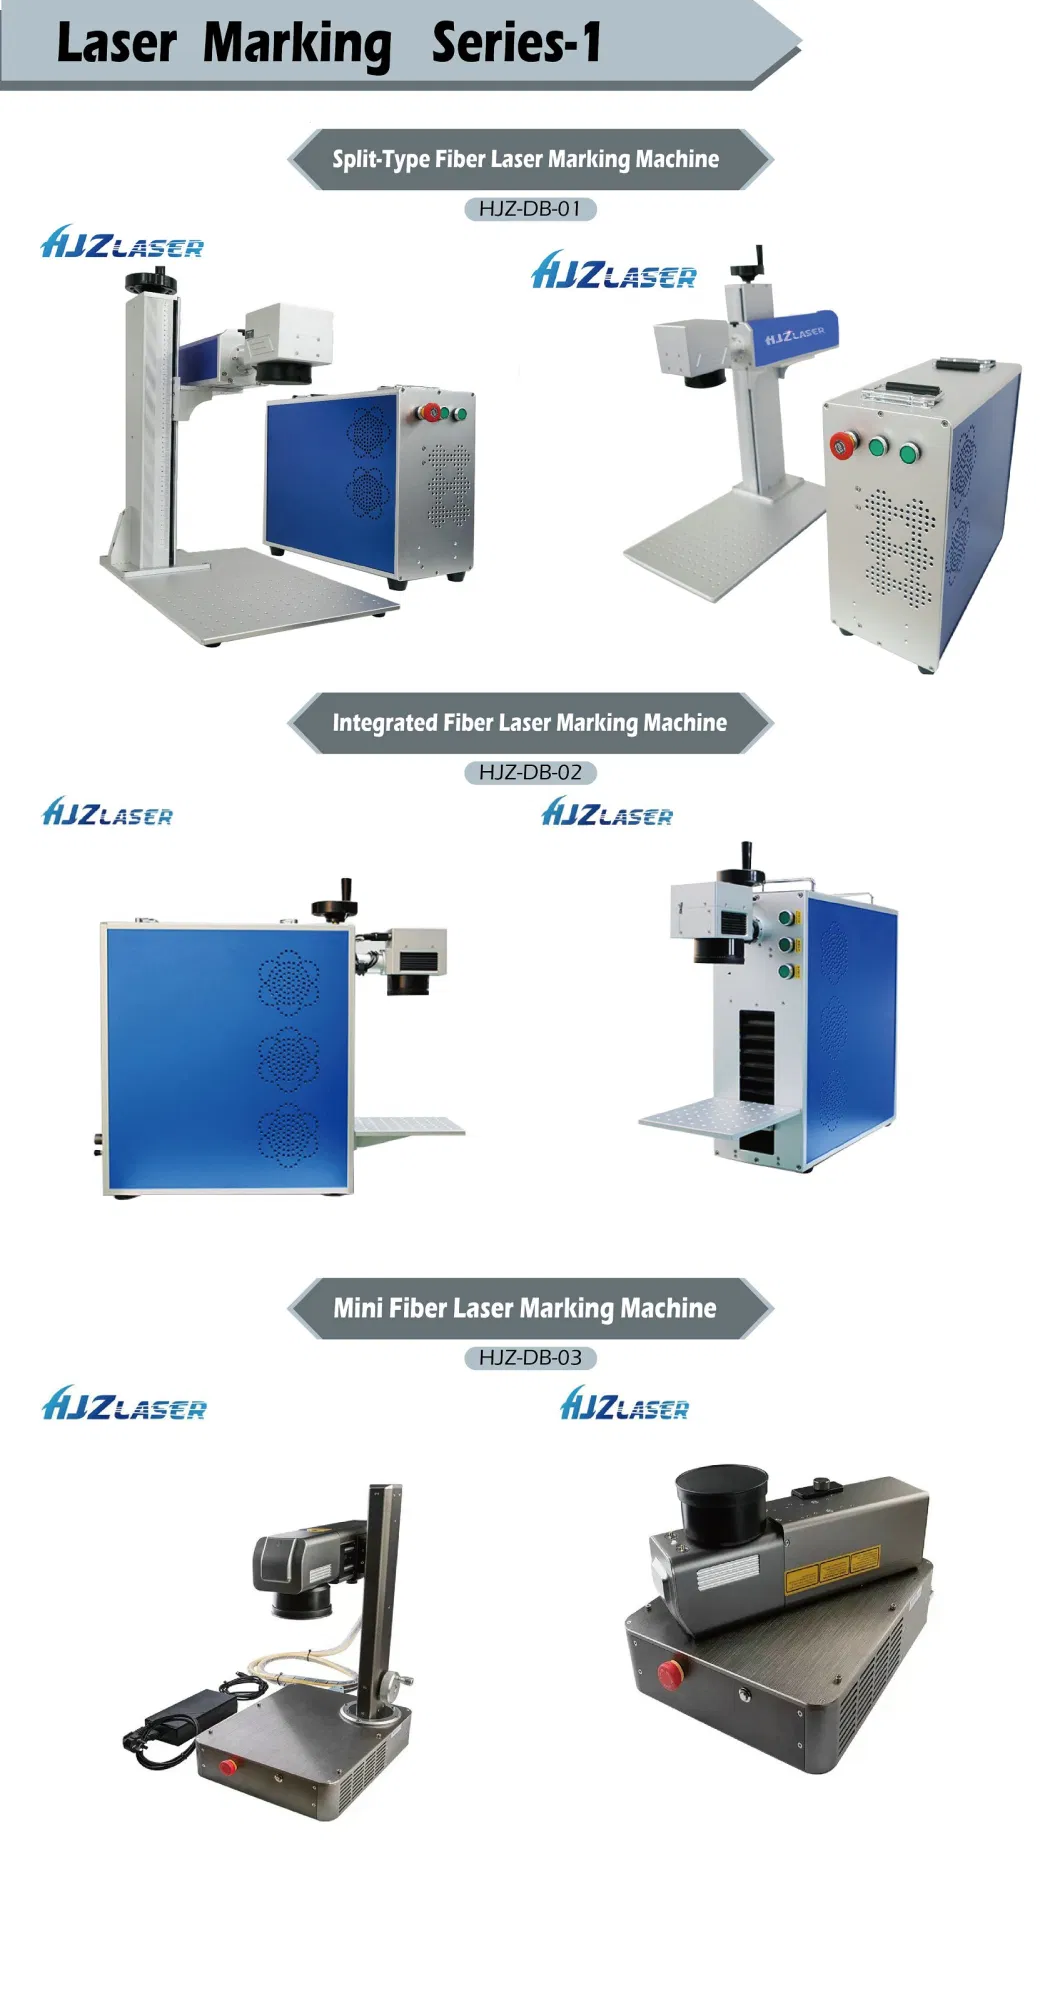 Anti-Counterfeiting Mark Laser Engraving Machine Laser Etcher for Metal